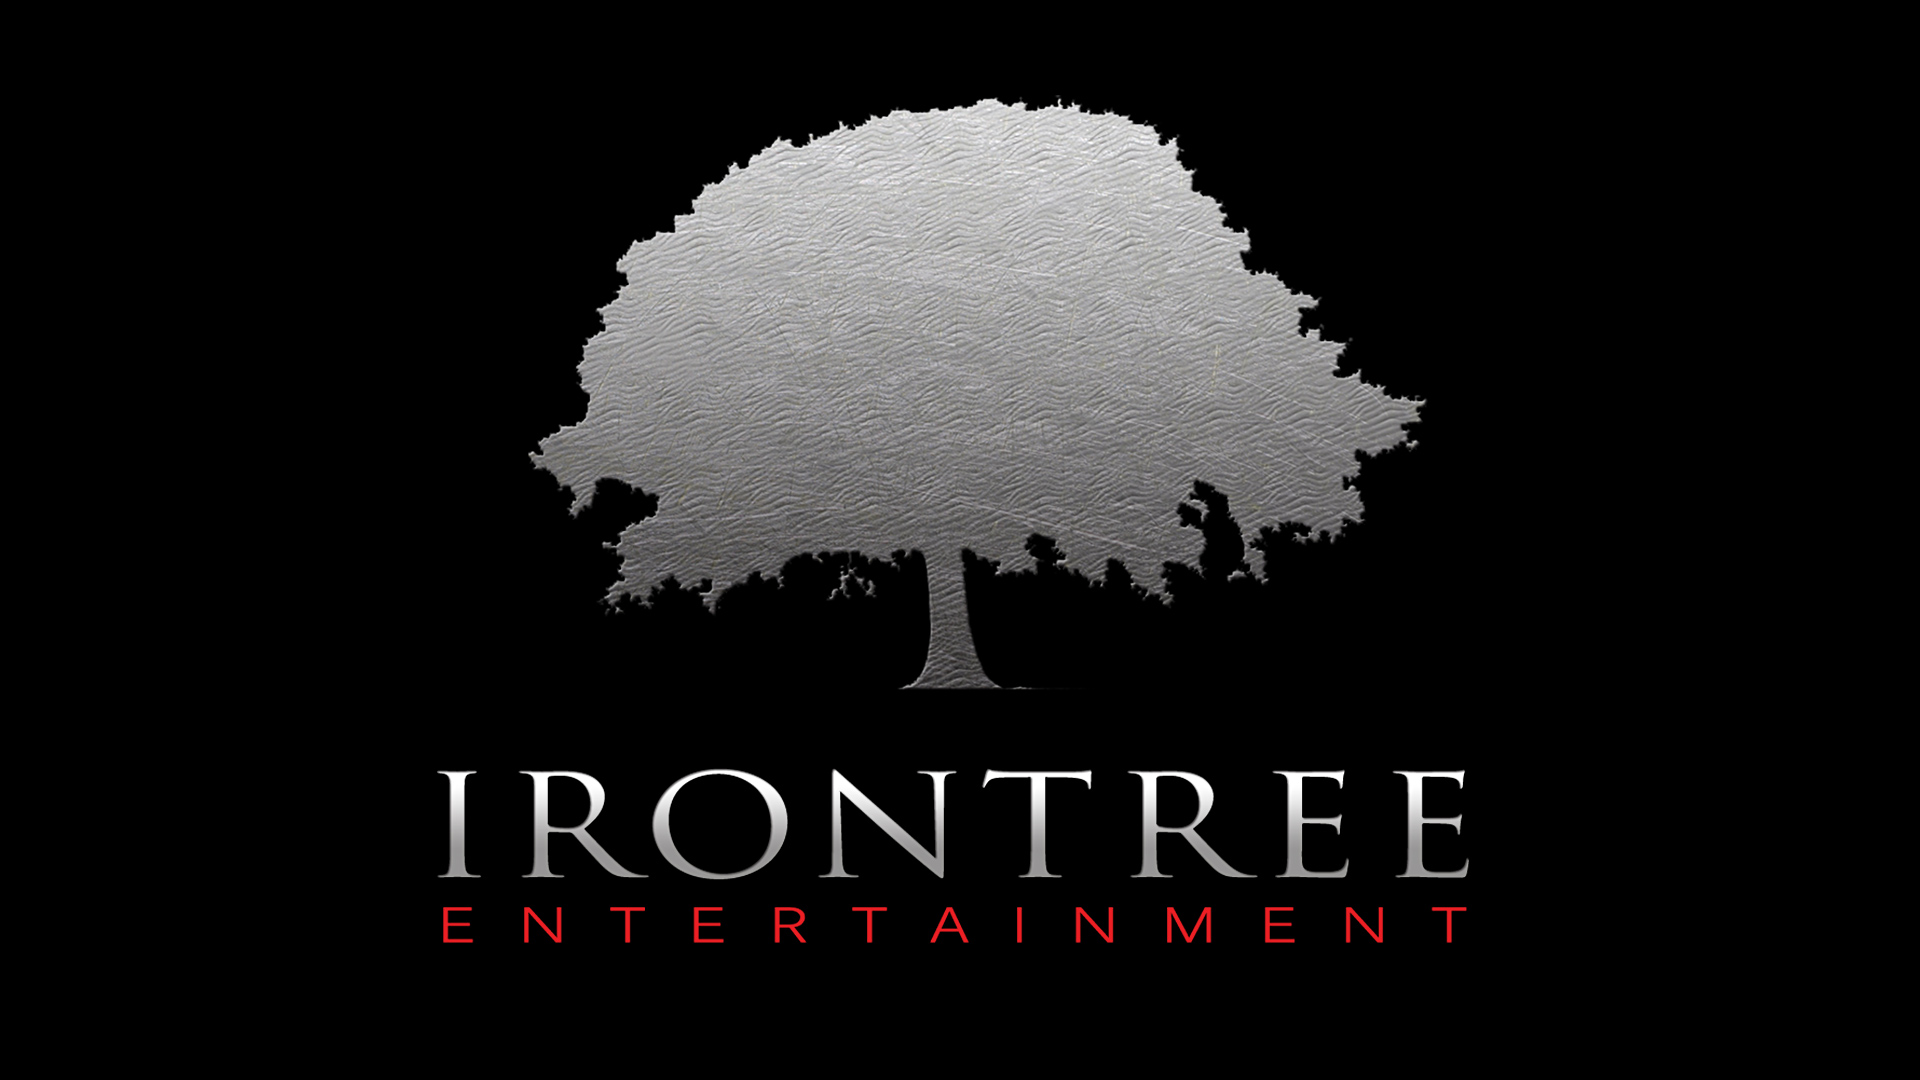 Irontree Entertainment